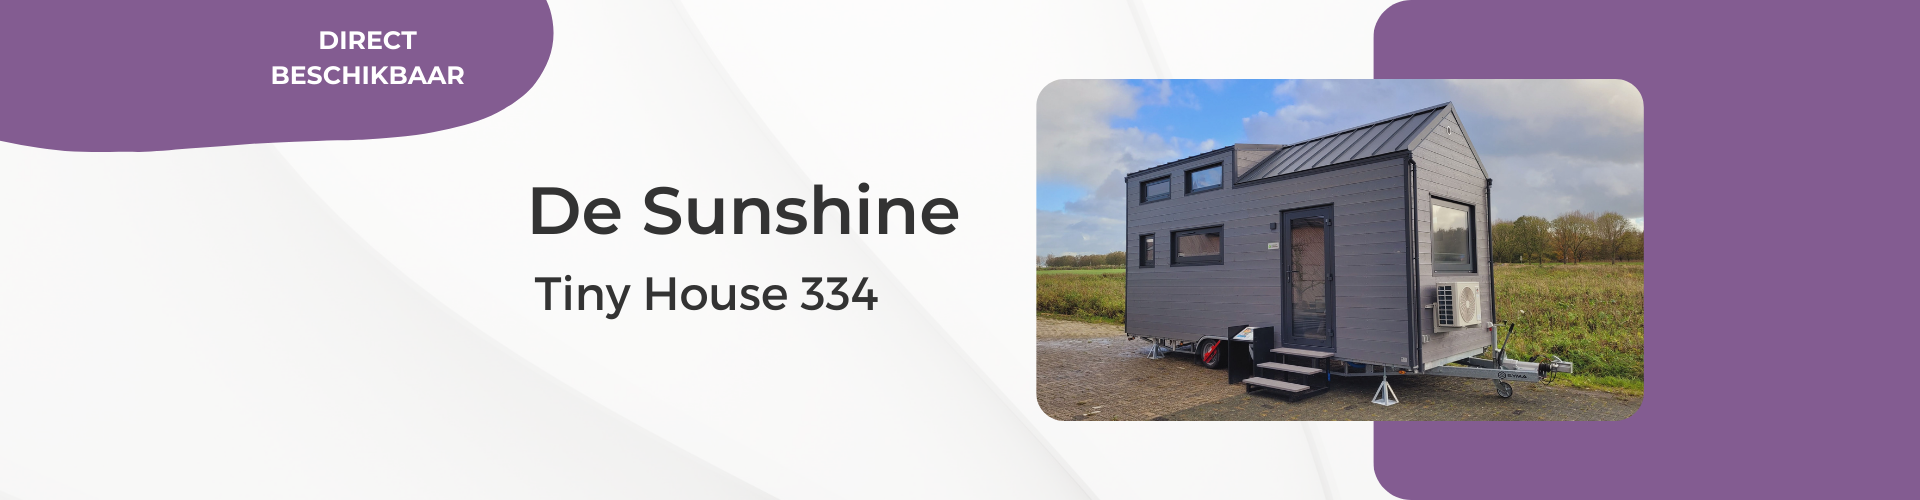 Tiny House Sunshine 334 - direct beschikbaar